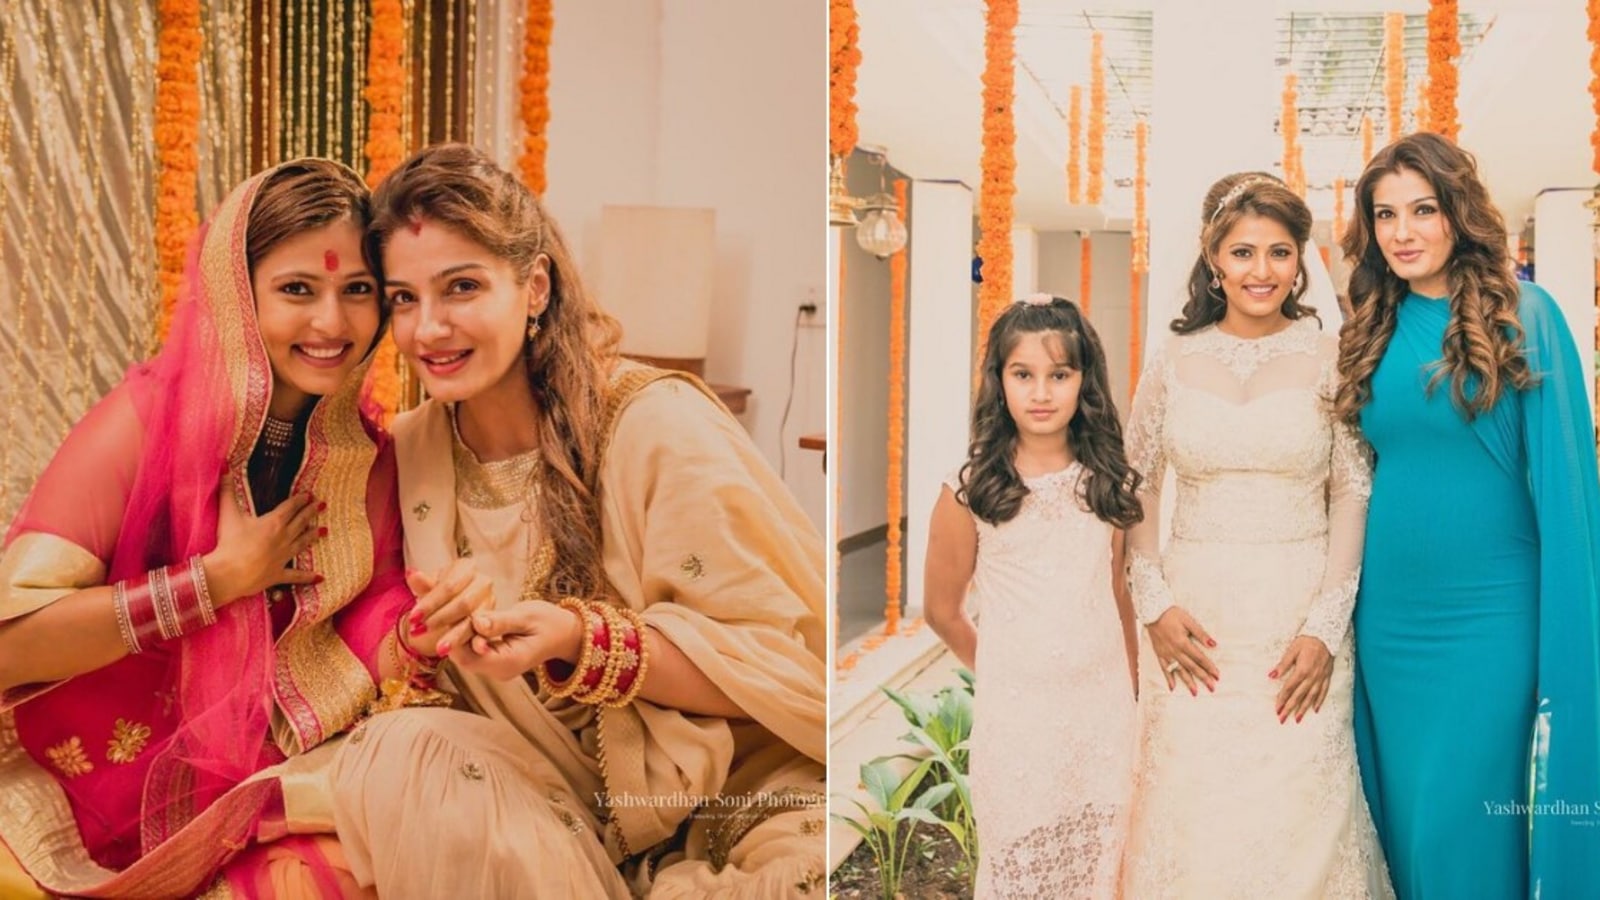 Raveena Tandon Sex Picture Video - Raveena wishes daughter Chaya on wedding anniversary, posts 'beautiful  memories' | Bollywood - Hindustan Times